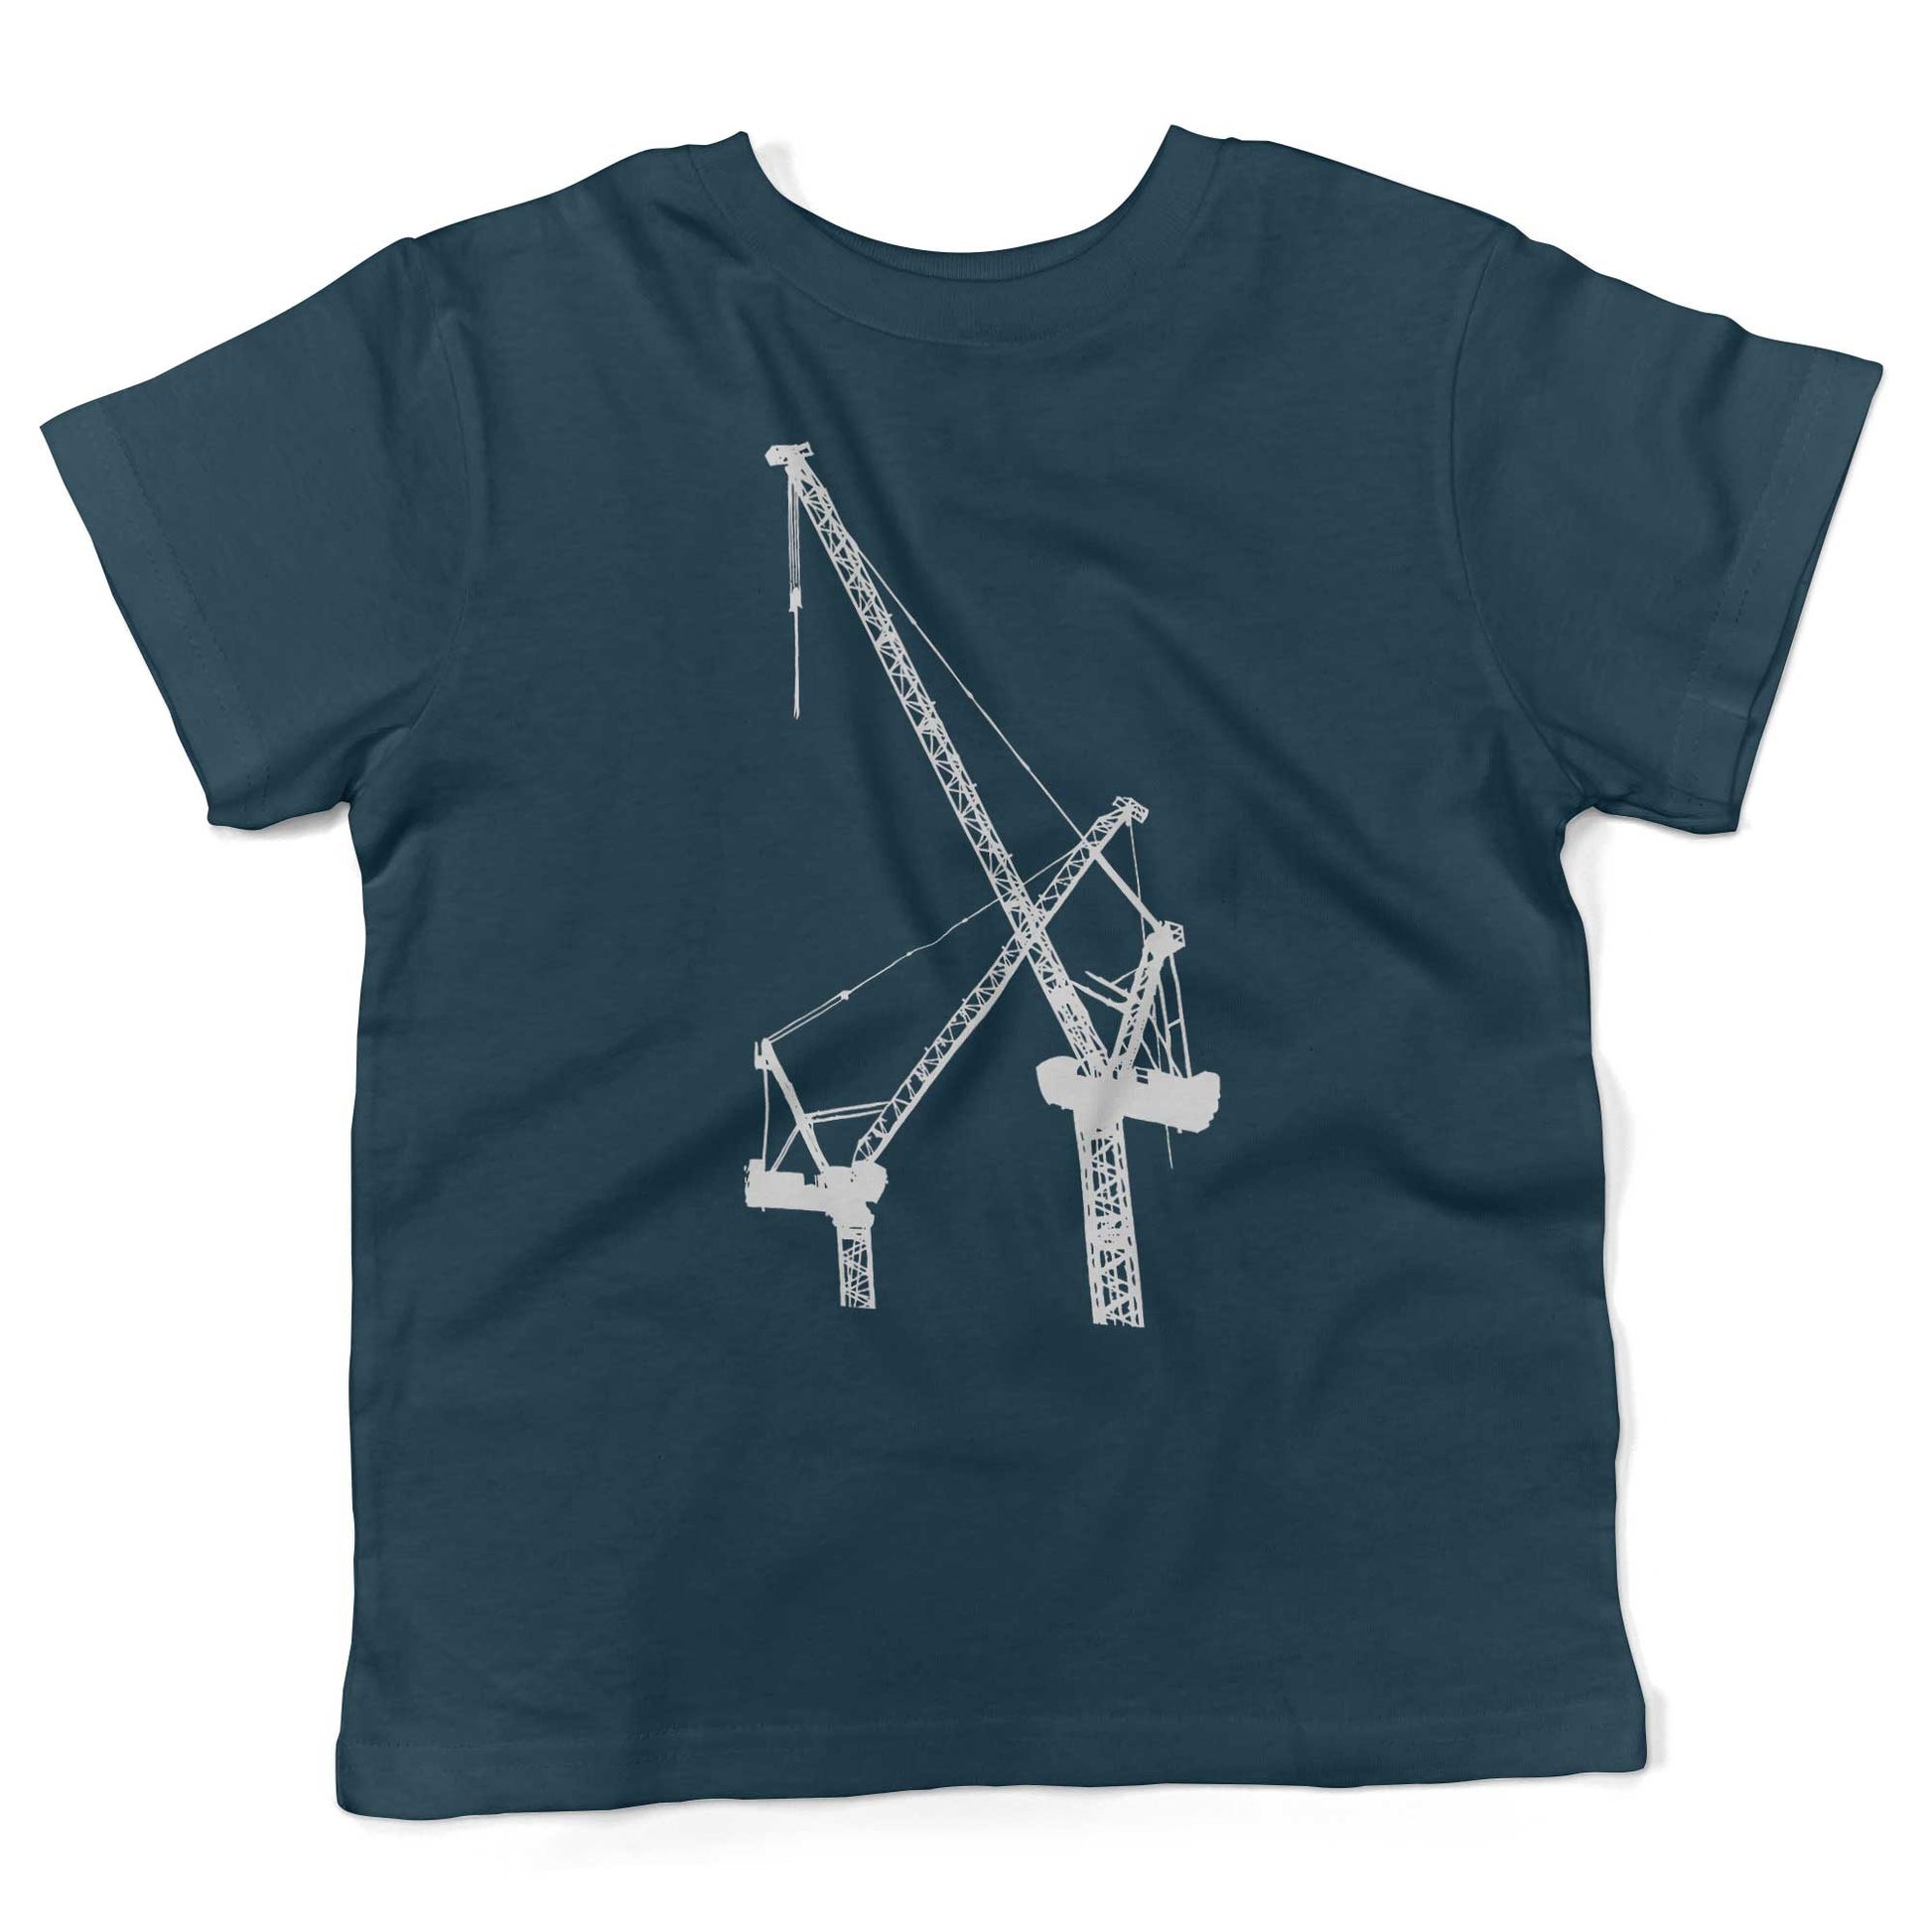 Construction Cranes Toddler Shirt-Organic Pacific Blue-2T